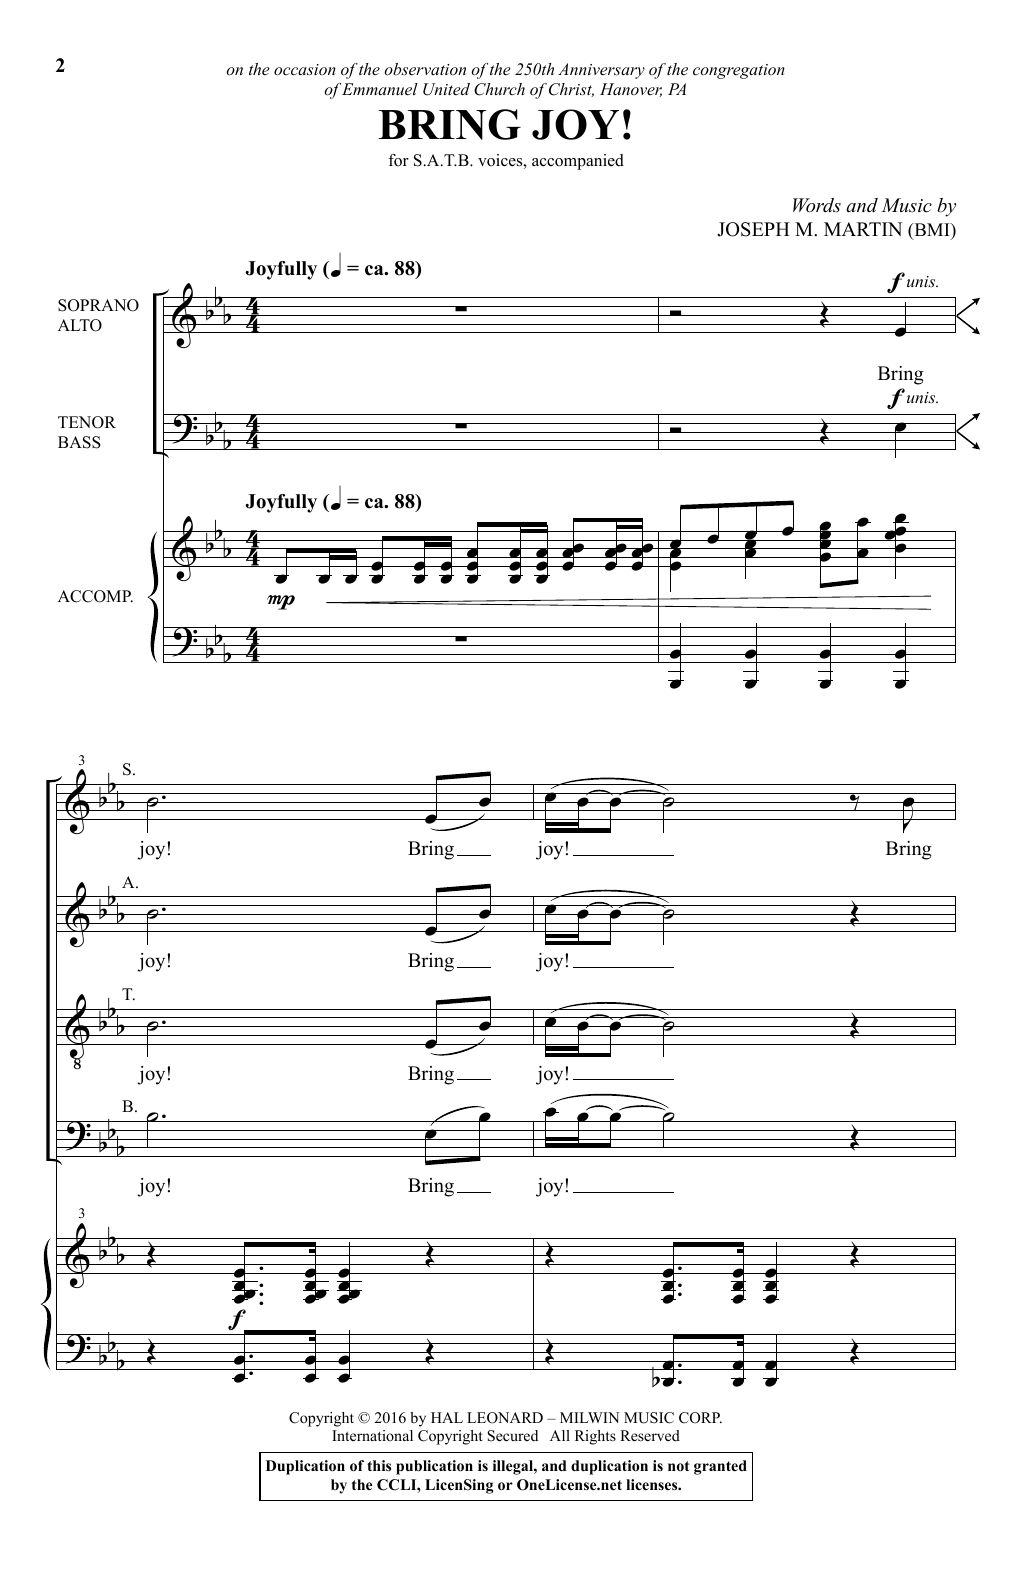 Joseph M. Martin Bring Joy! Sheet Music Notes & Chords for SATB - Download or Print PDF